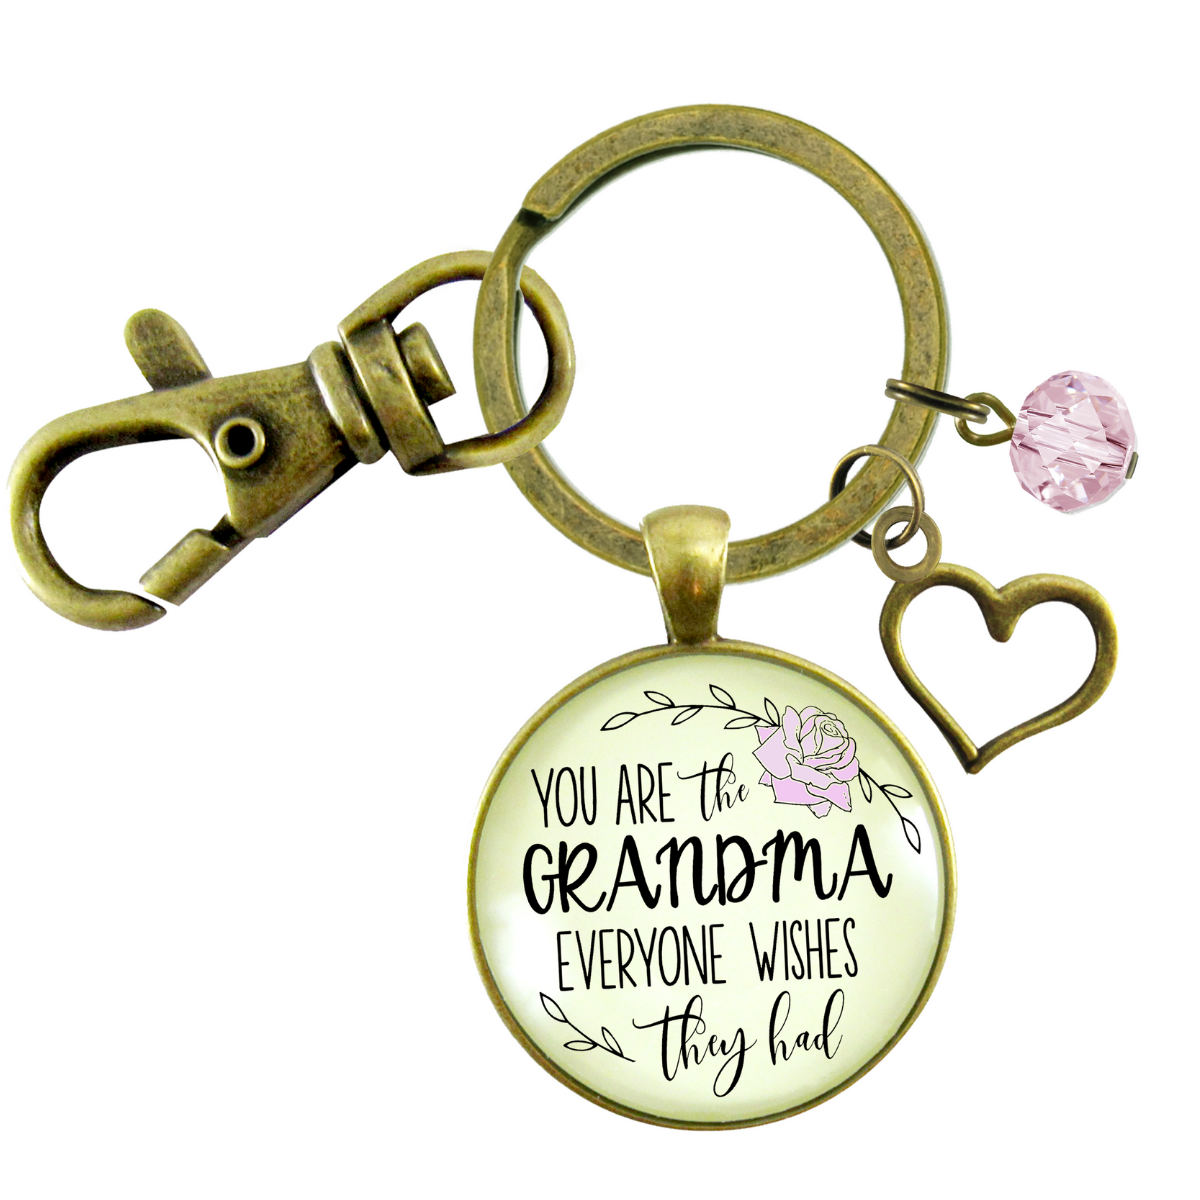 Grandma Keychain You Are The Grandma Everyone Wishes For Gift - Gutsy Goodness Handmade Jewelry;Grandma Keychain You Are The Grandma Everyone Wishes For Gift - Gutsy Goodness Handmade Jewelry Gifts